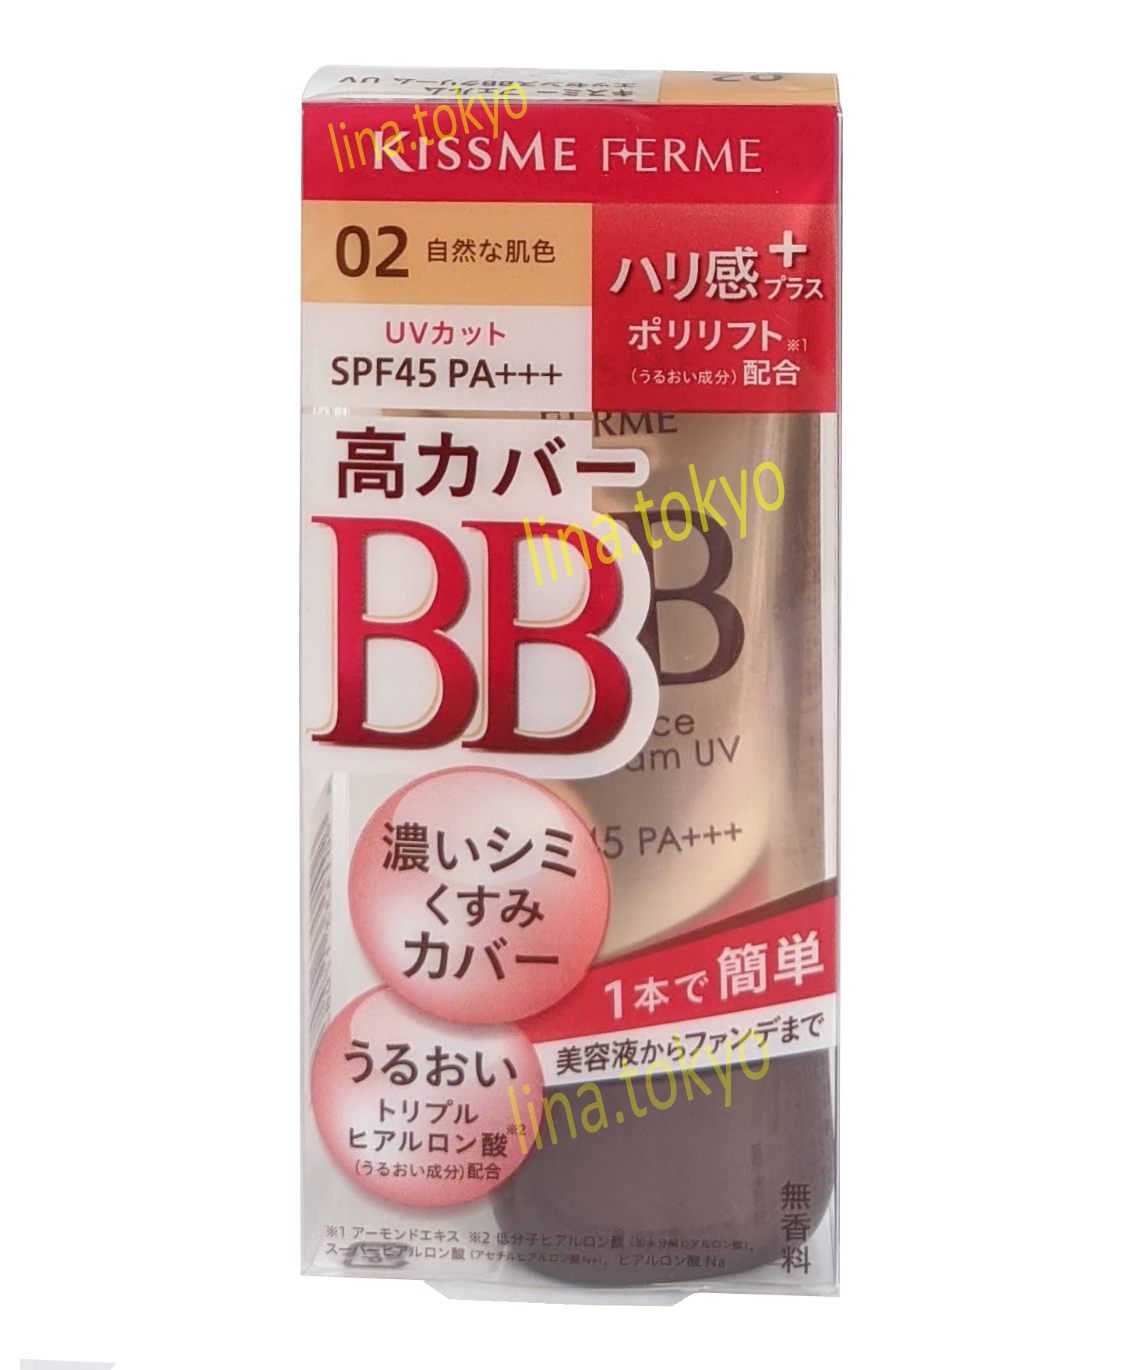 KM1512-BB cream 02